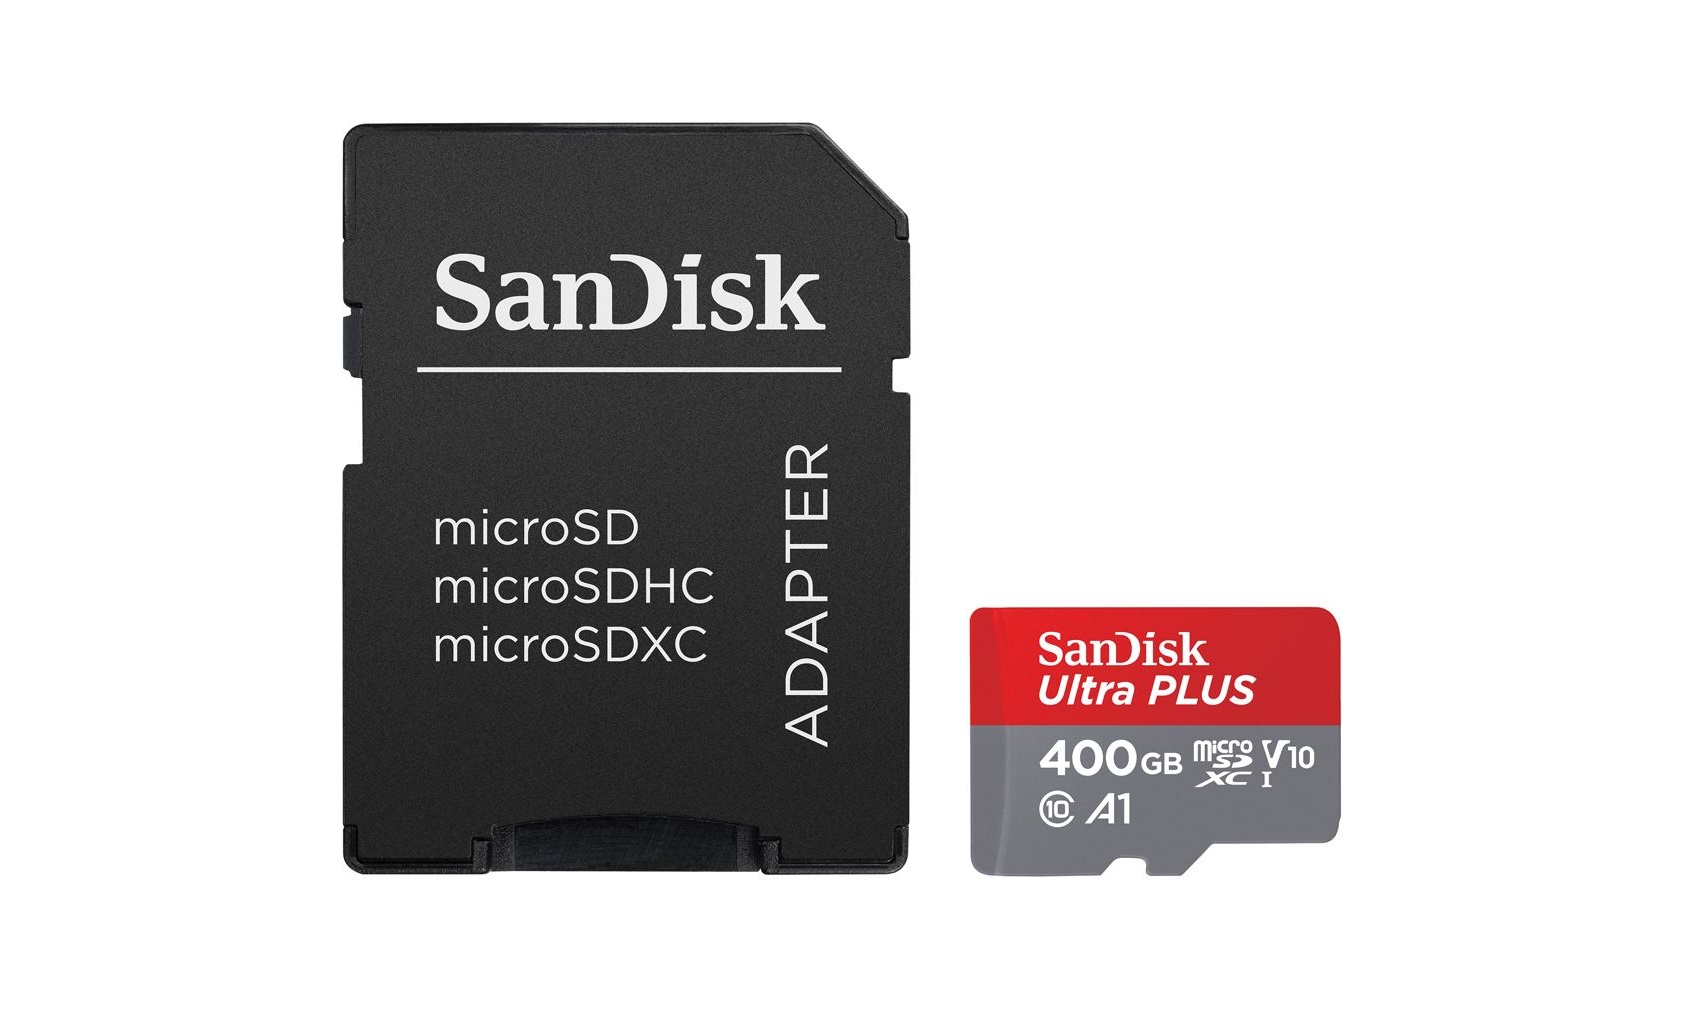 400GB kapasiteli microSD kart indirimde